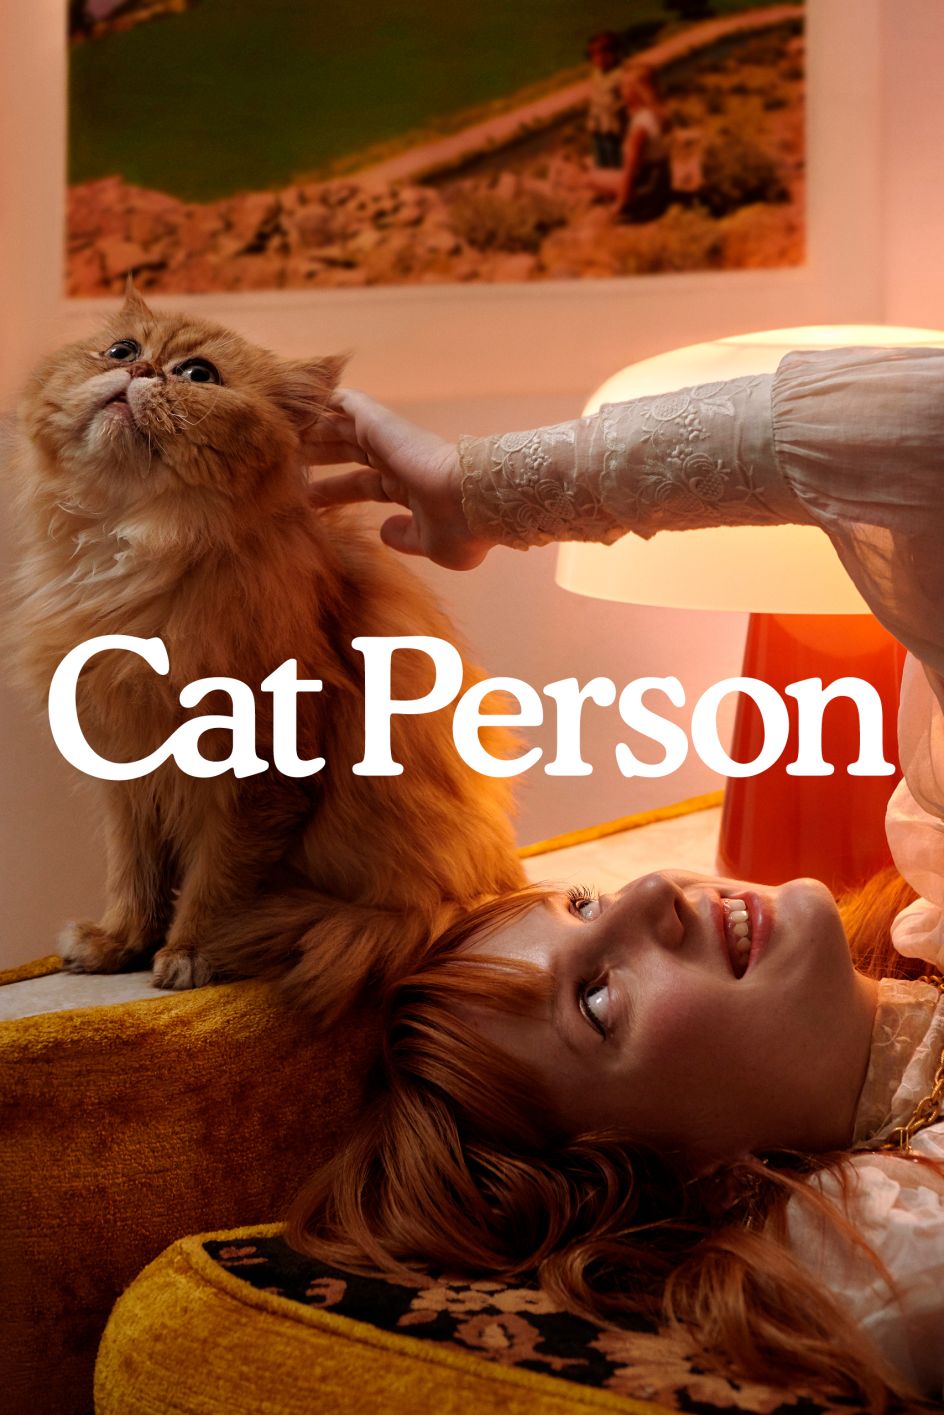 Cat Person brand photography was shot by [David Robert Elliott](https://davidrobertelliott.com/)